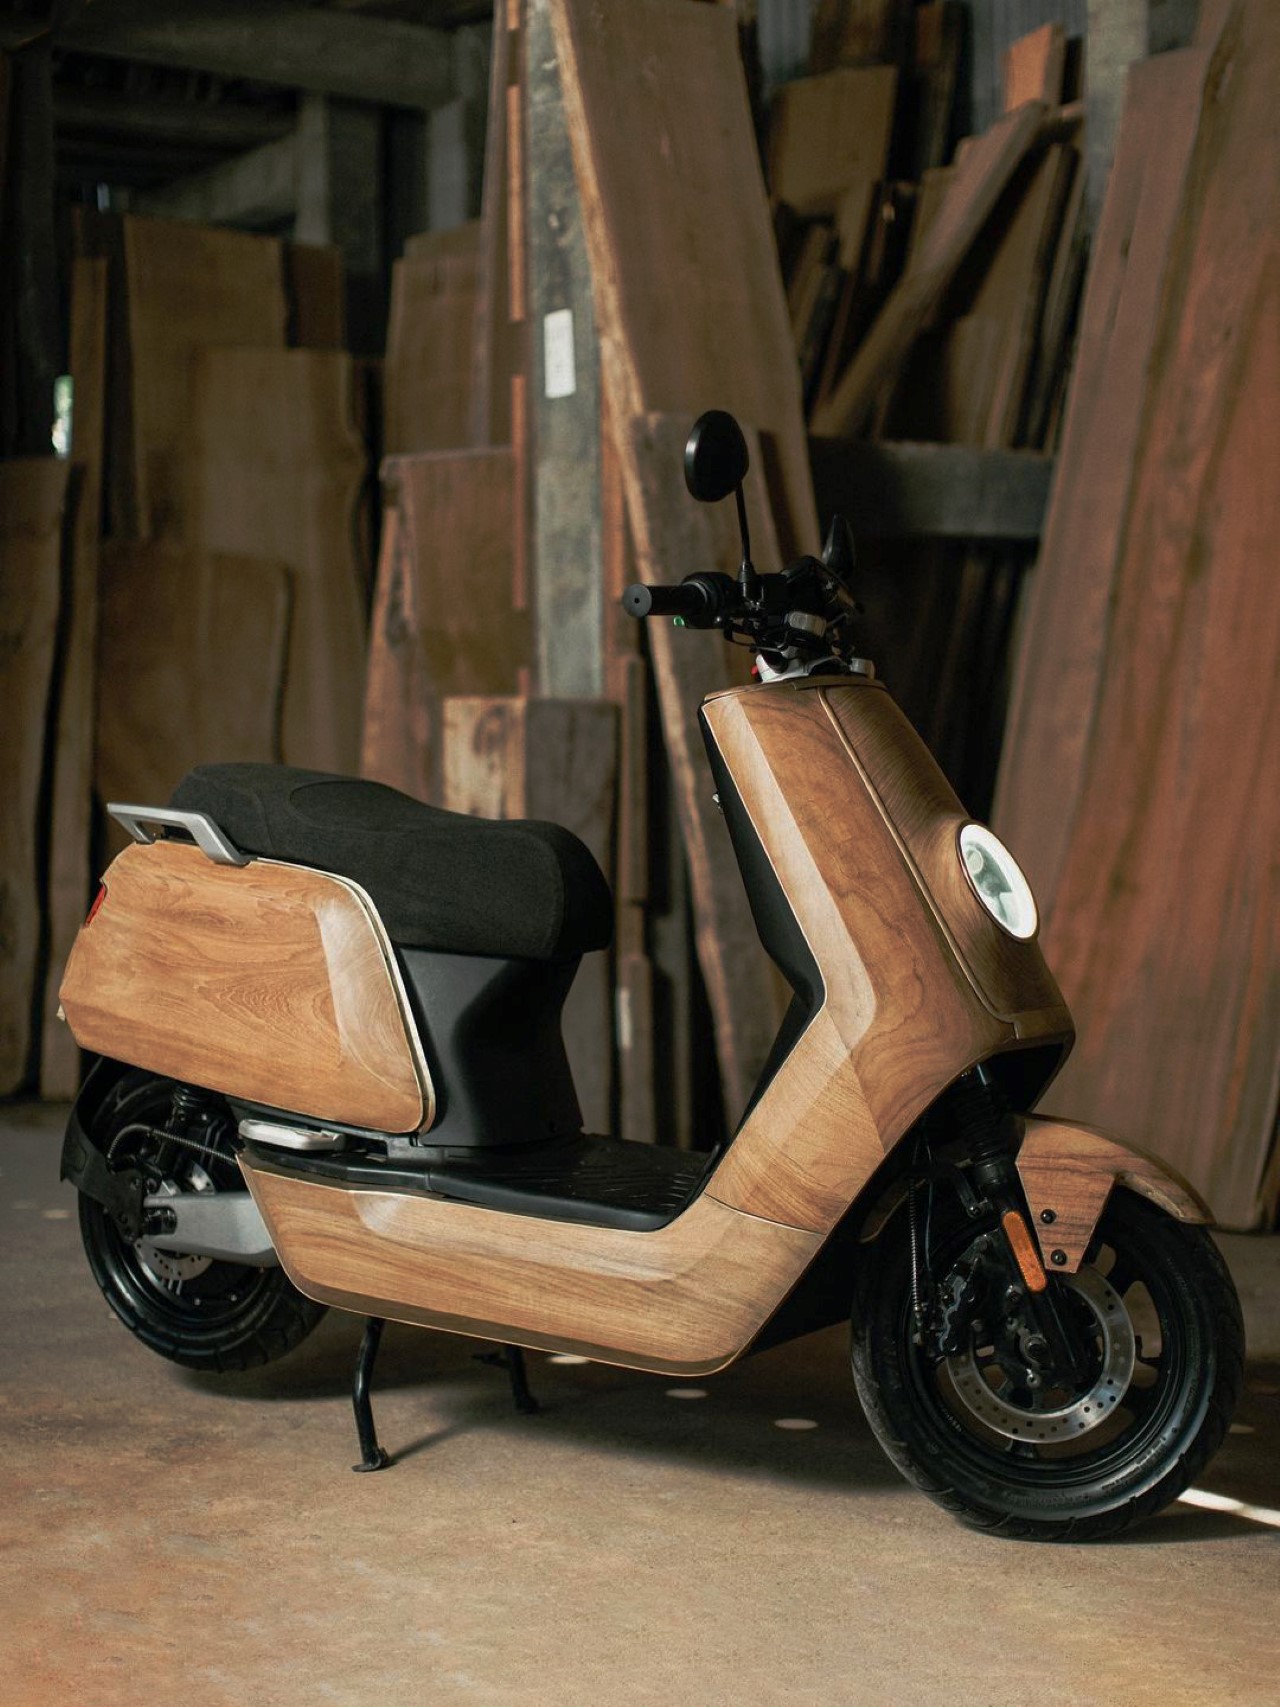 Custom Wooden NIU Moped by Kalpataru